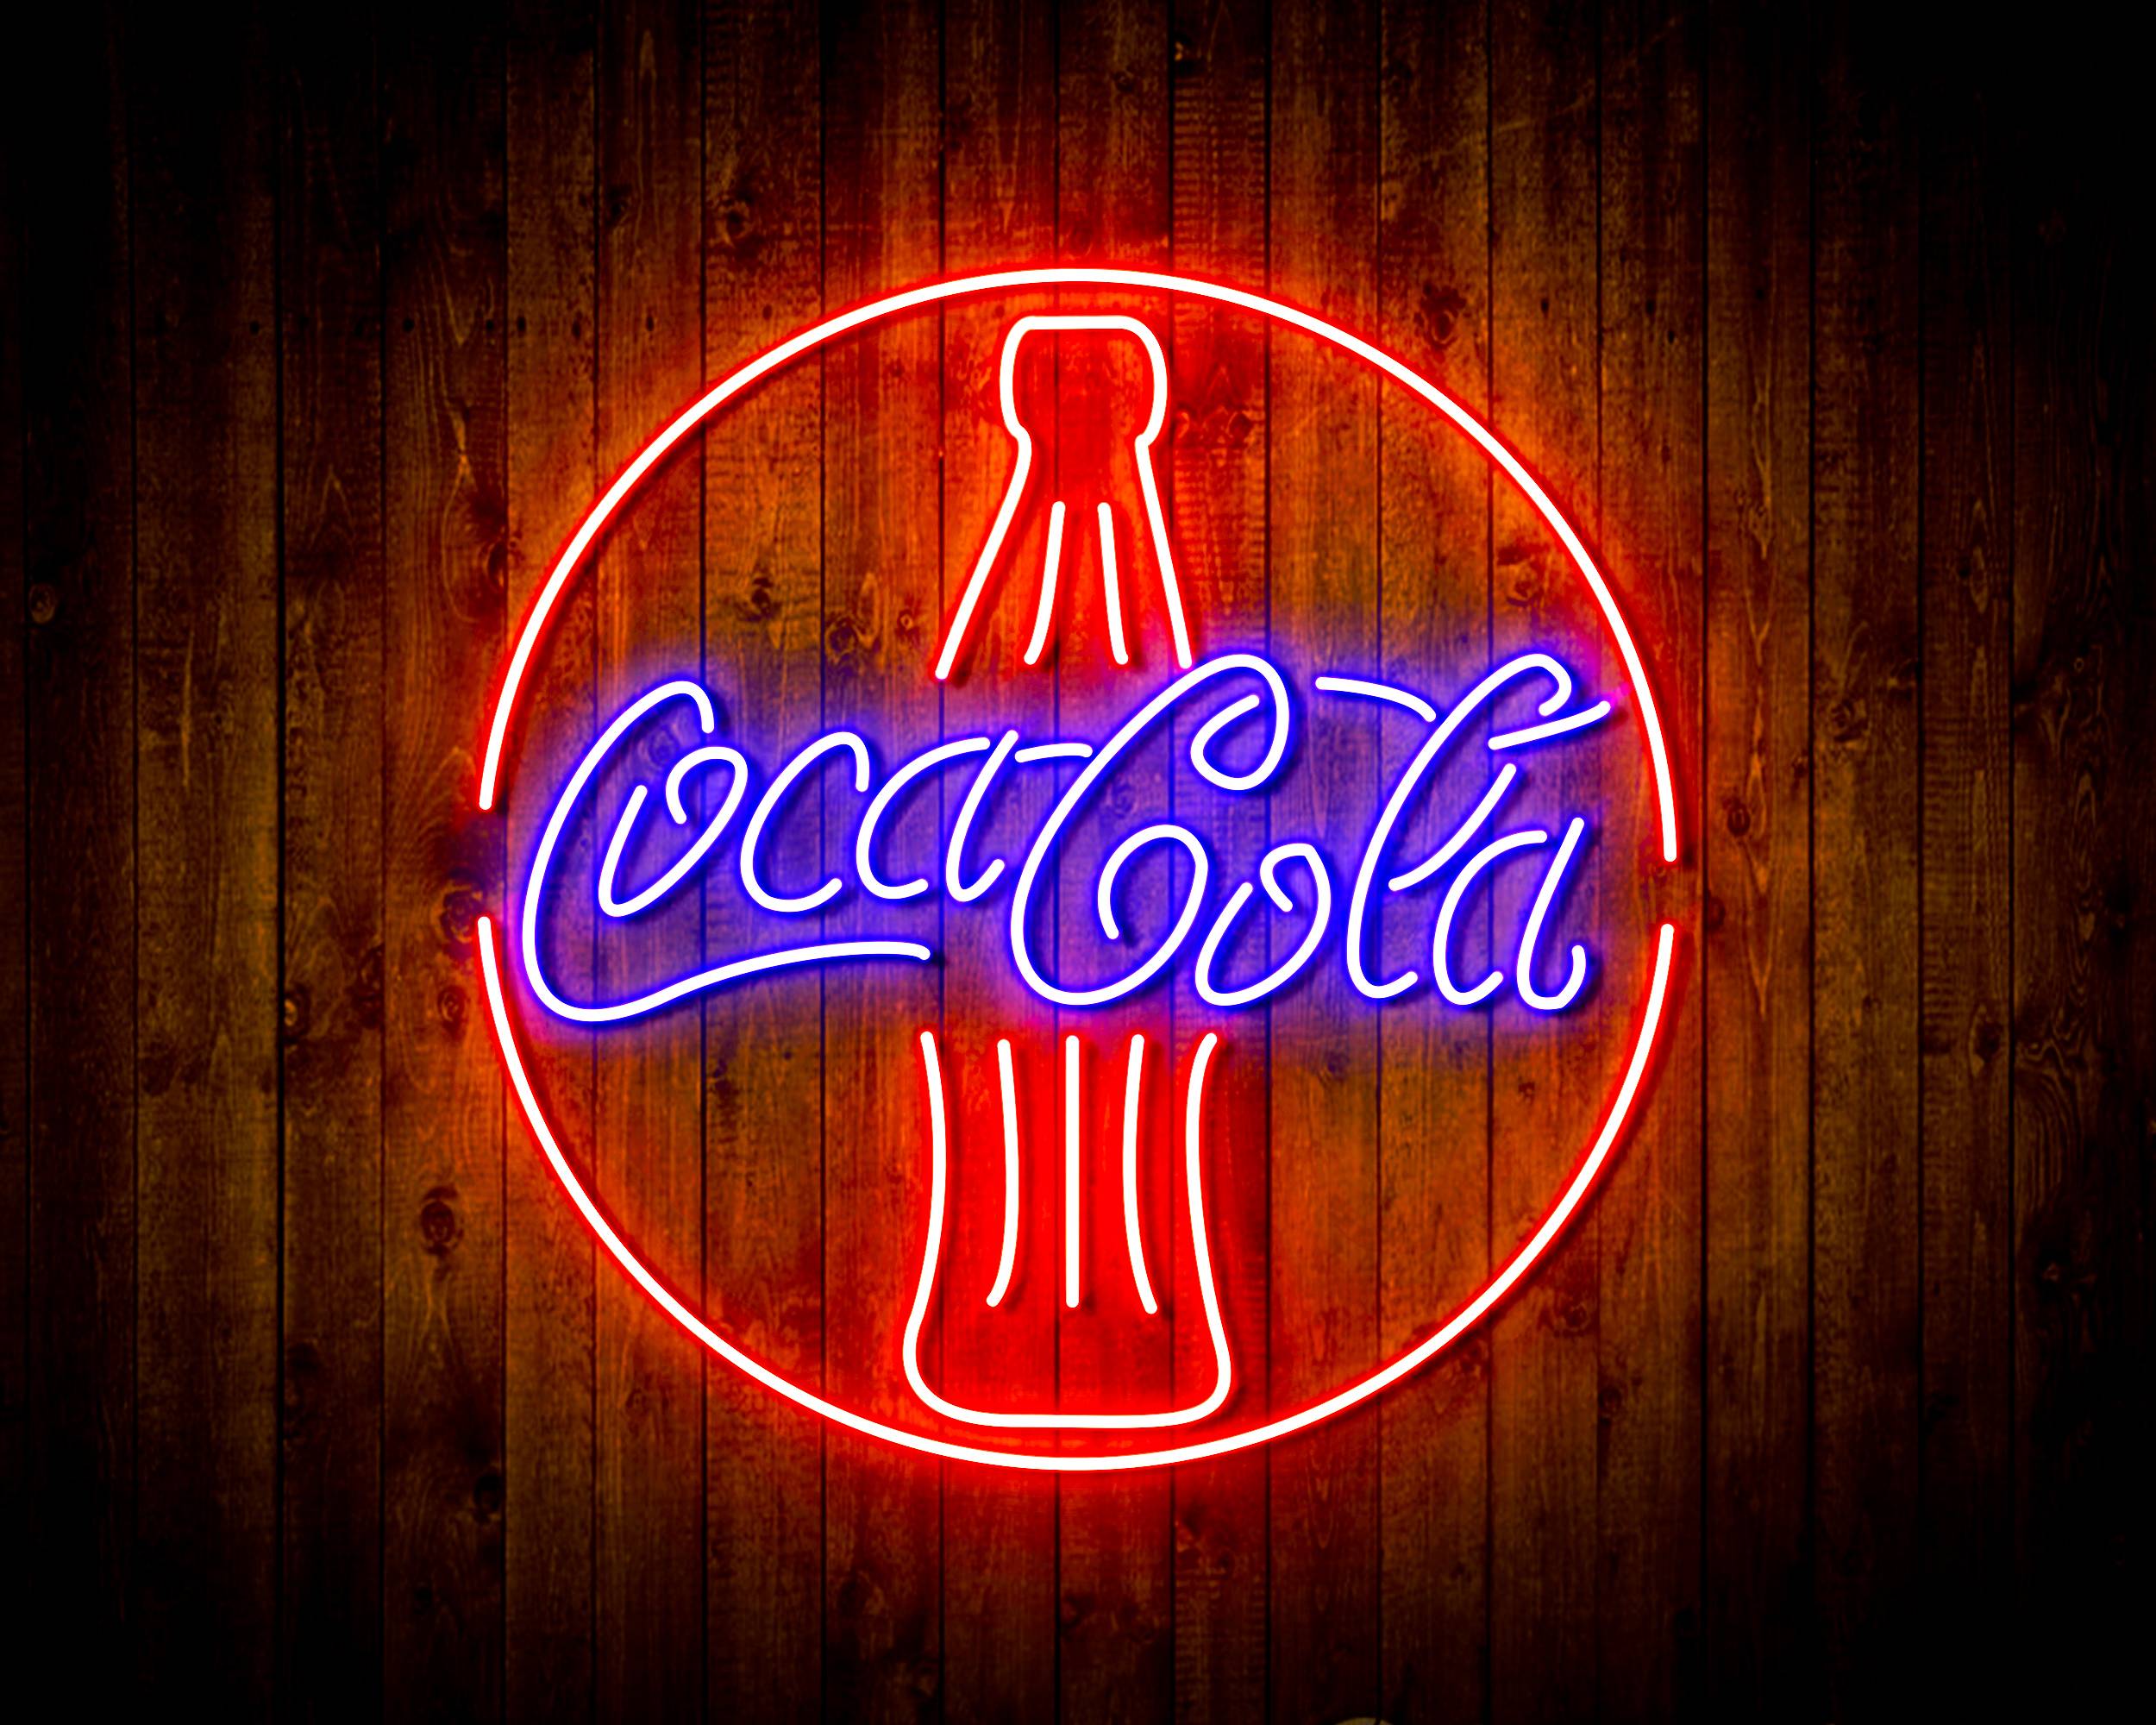 Coca-cola Handmade Neon Flex LED Sign